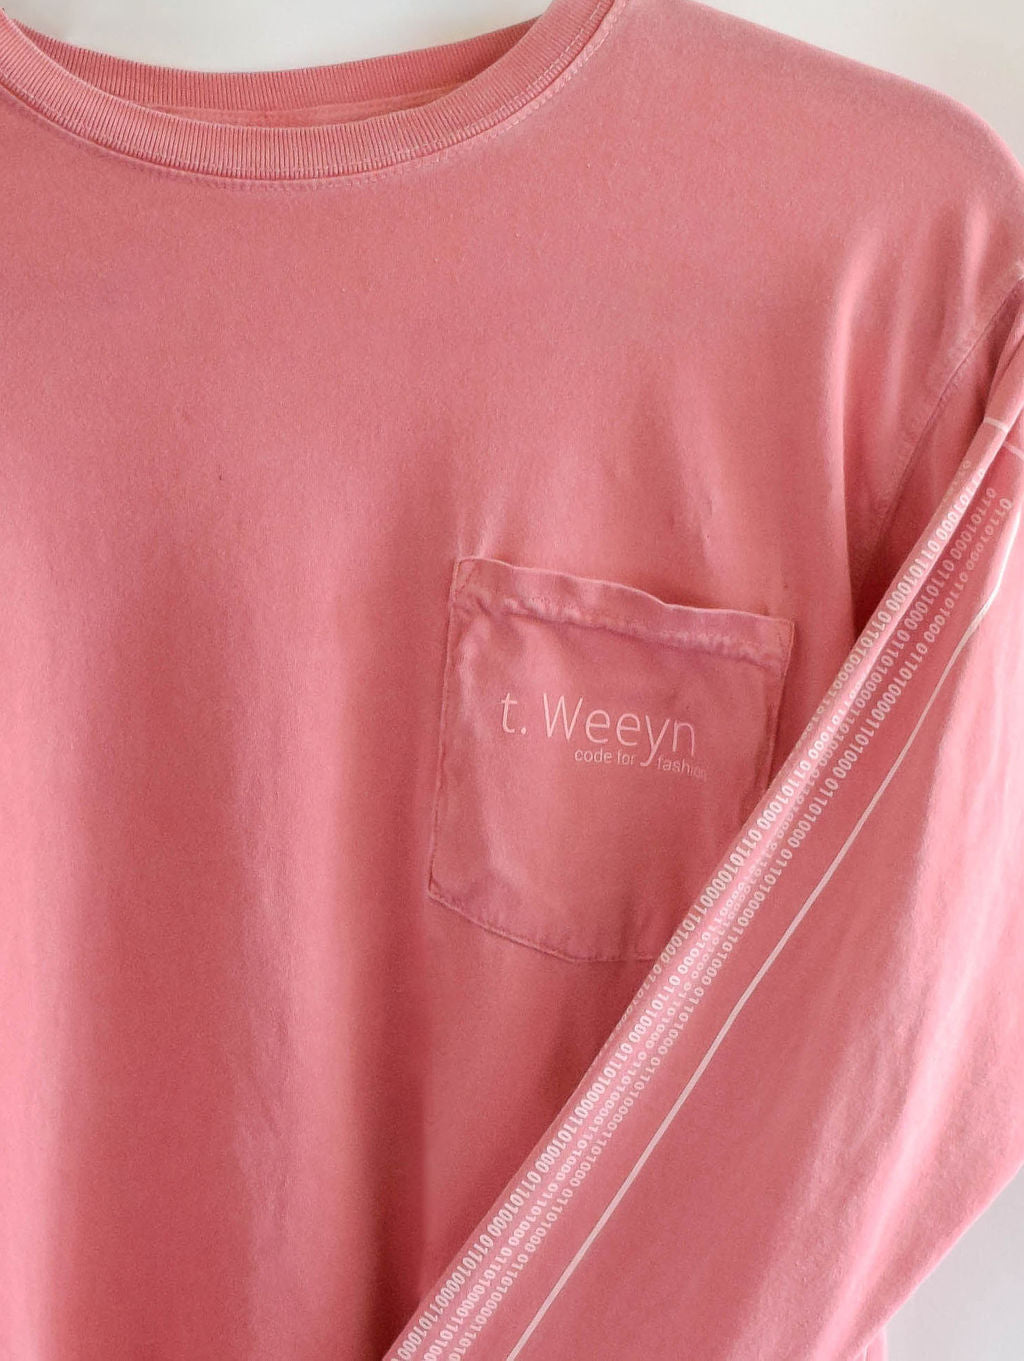 t. Weeyn Heart binary code guava women's front t shirt